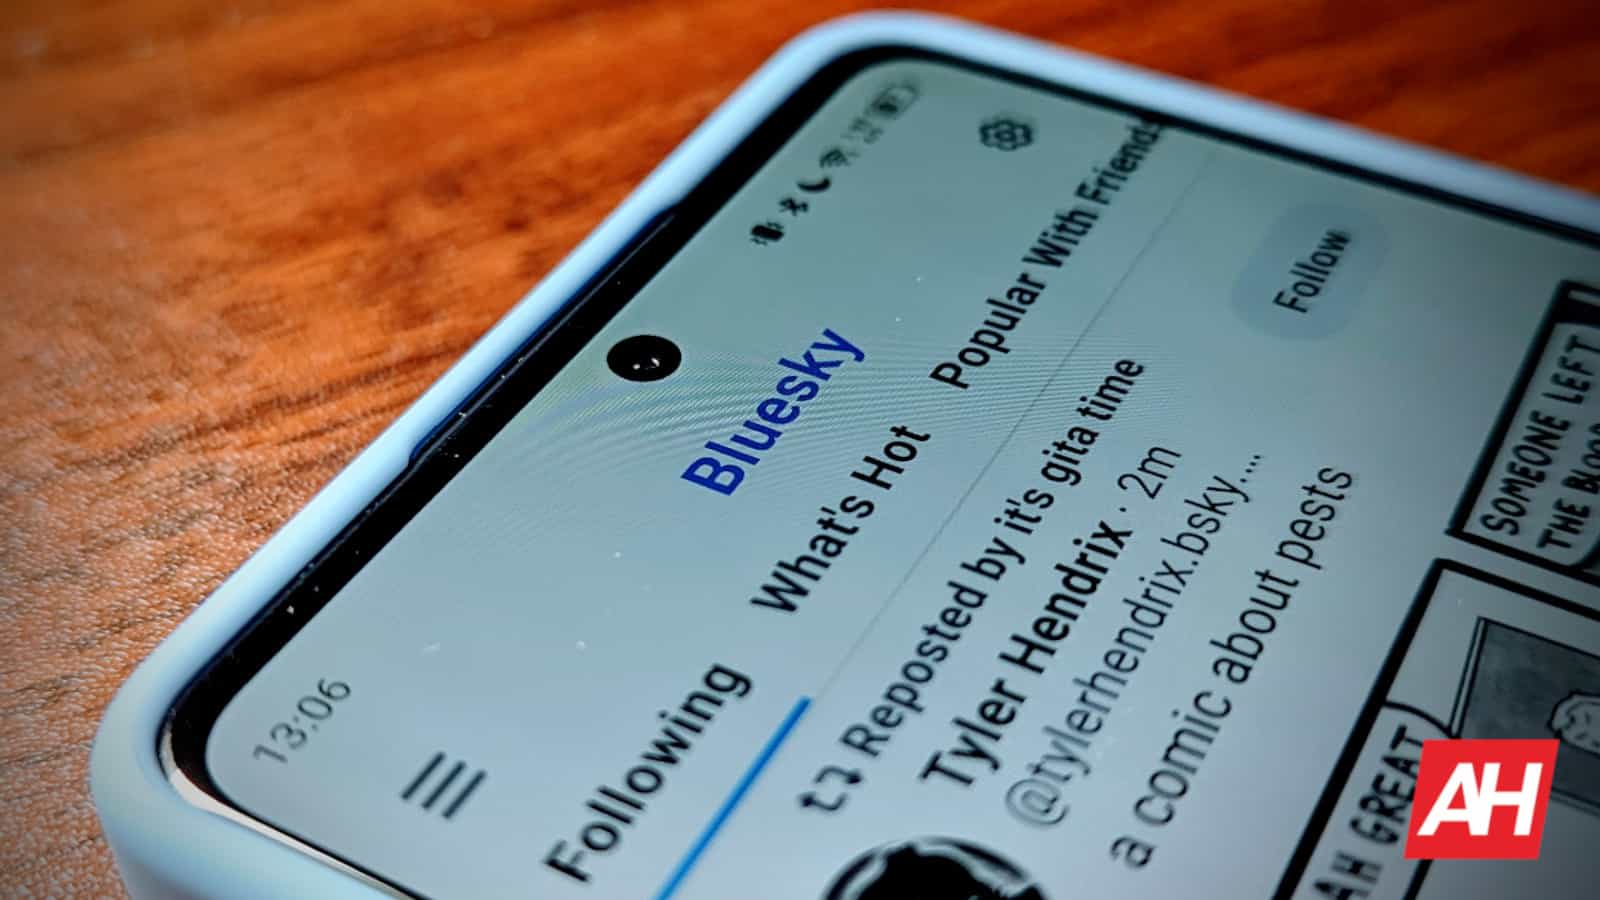 Twitter co-founder is no longer part of the Bluesky board